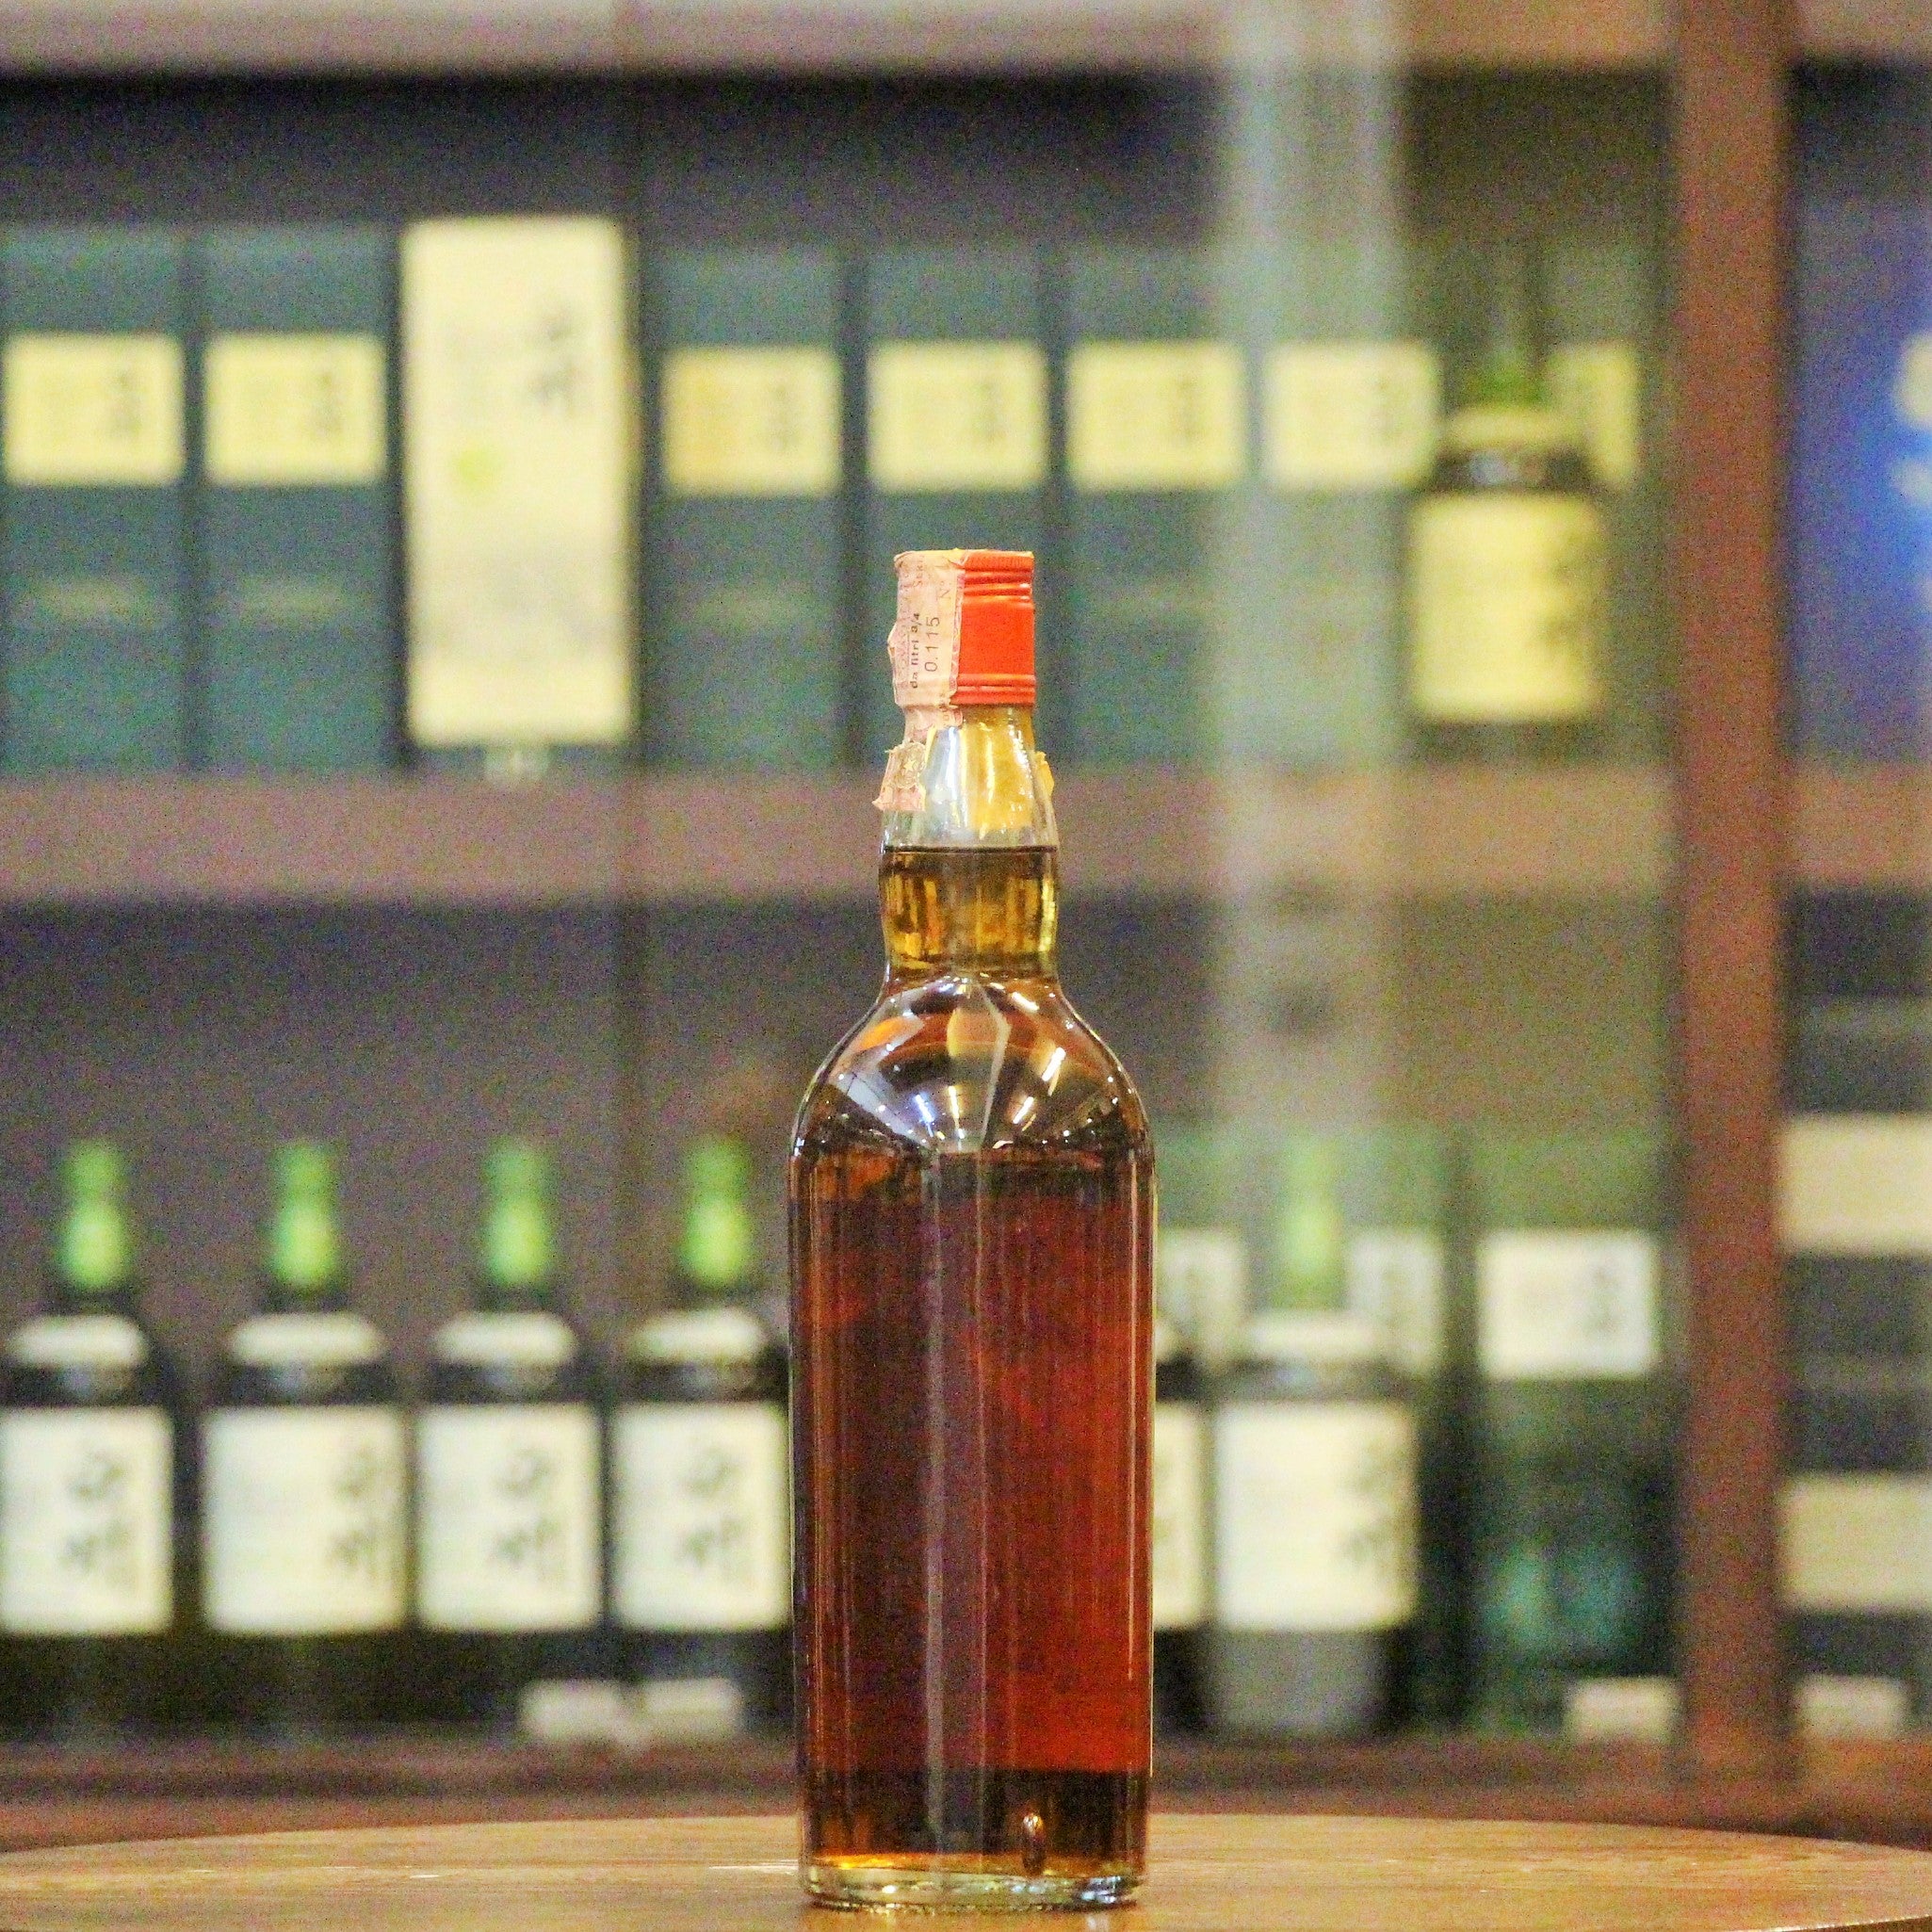 Macallan Glenlivet 1950 by Gordon & MacPhail 25 Years Old  A Pure Highland Malt Scotch Whisky - 0